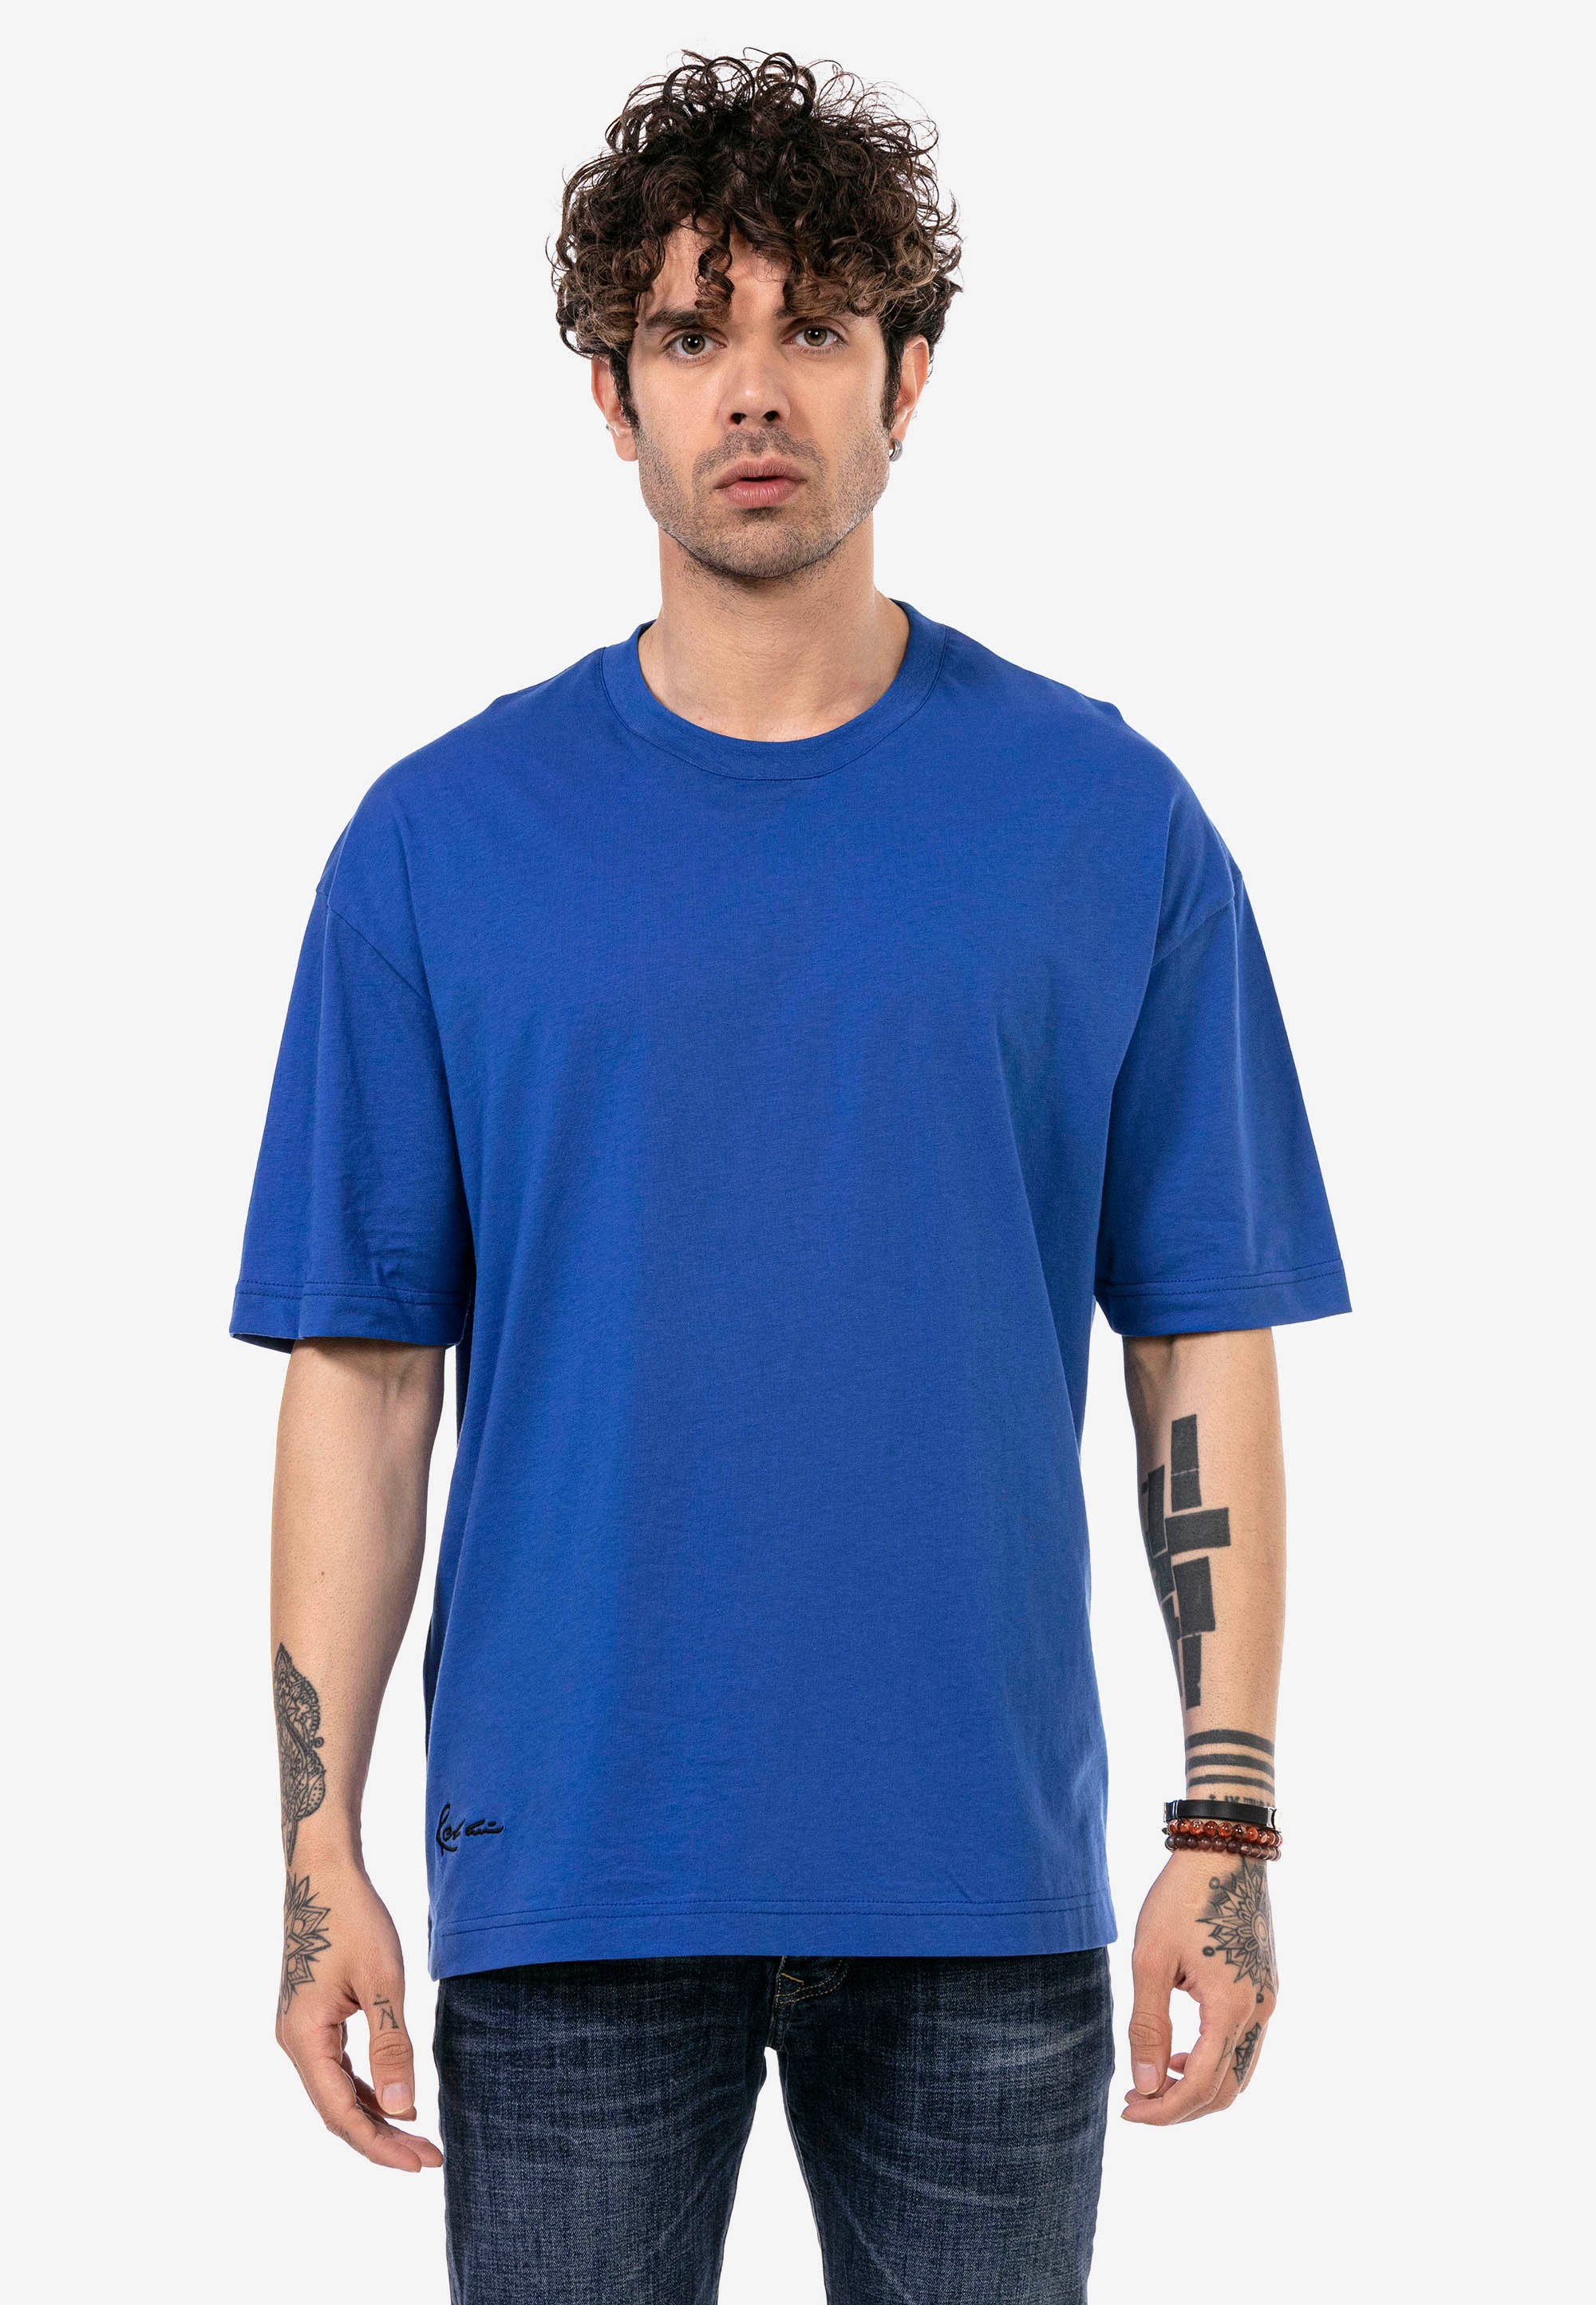 RedBridge T-Shirt im angesagten Oversize-Schnitt blau | T-Shirts